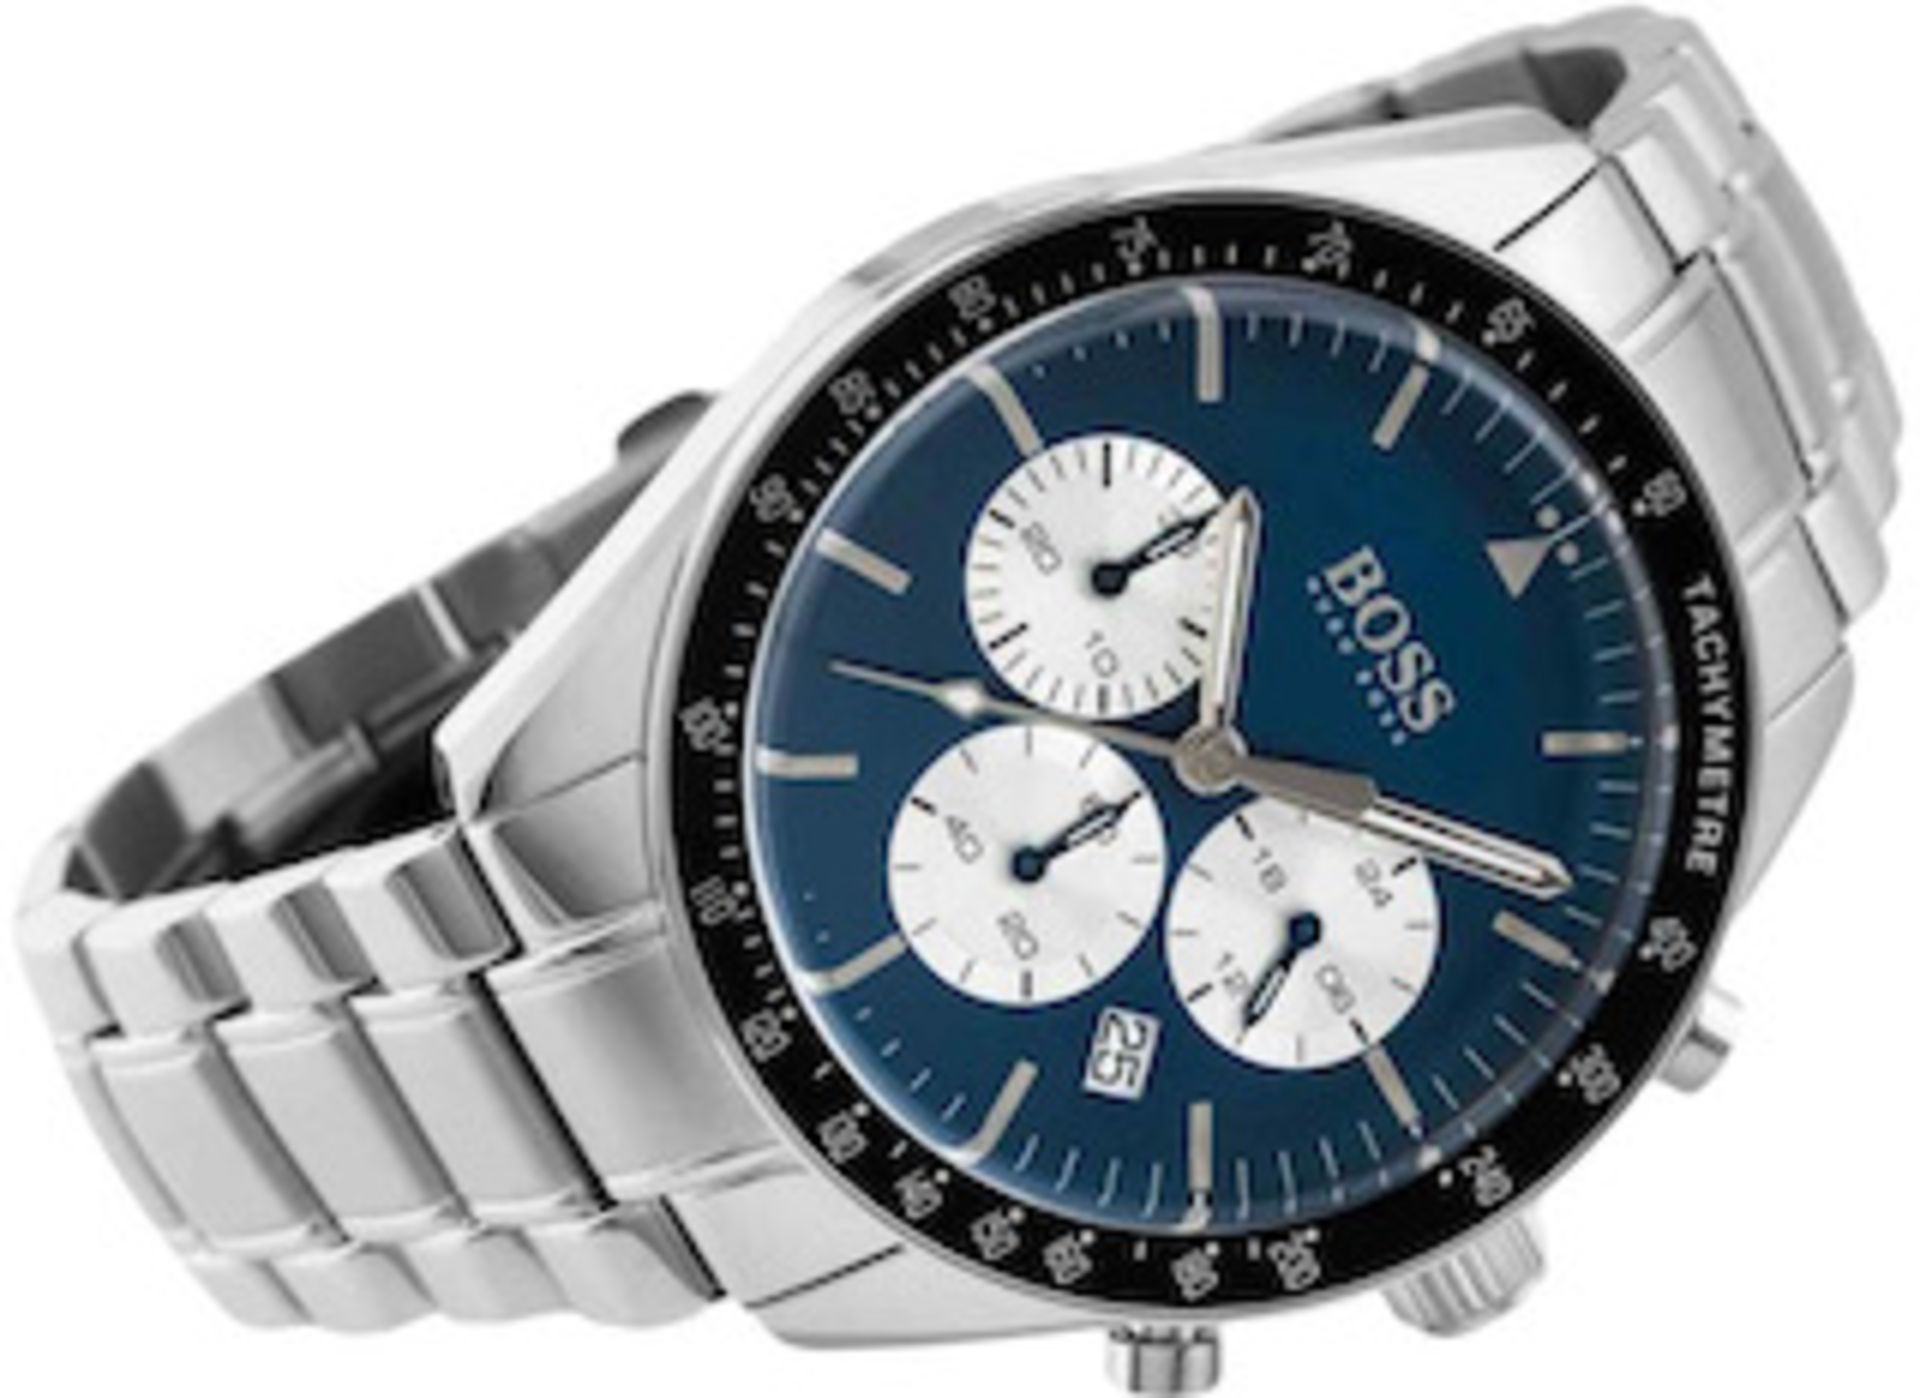 Hugo Boss 1513630 Men's Trophy Blue Dial Silver Bracelet Chronograph Watch - Image 4 of 5